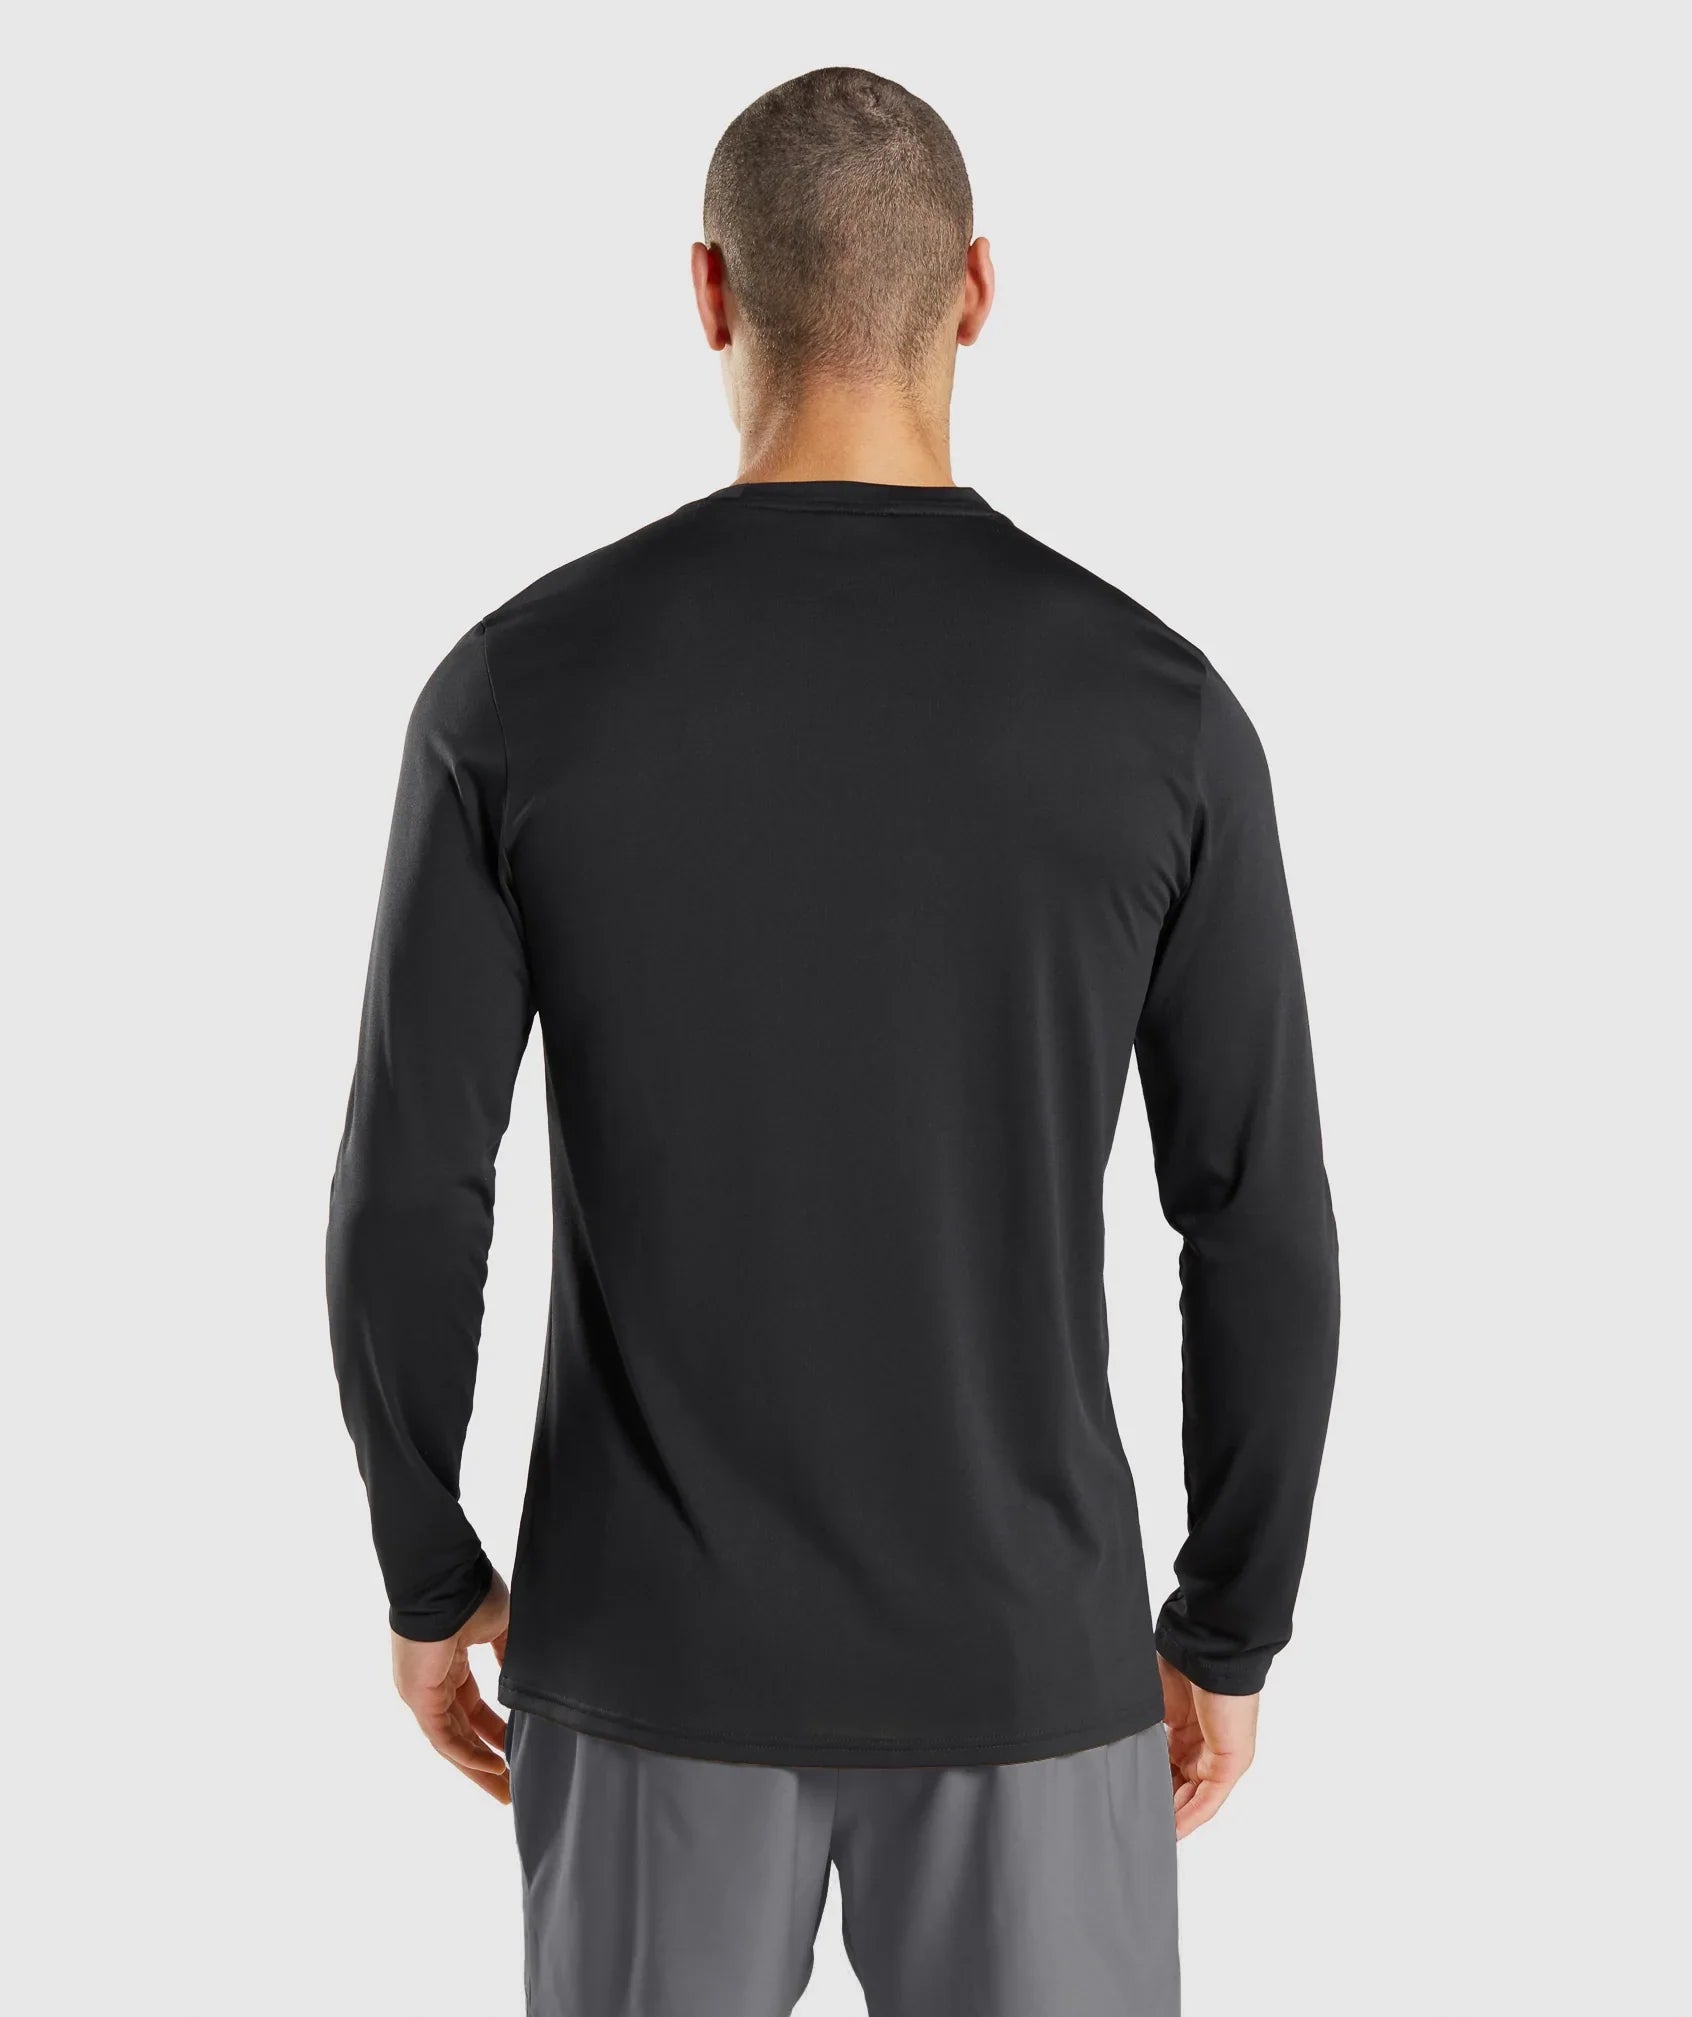 Gymshark Retake Crew Shirt - Long Sleeve - Save 86%